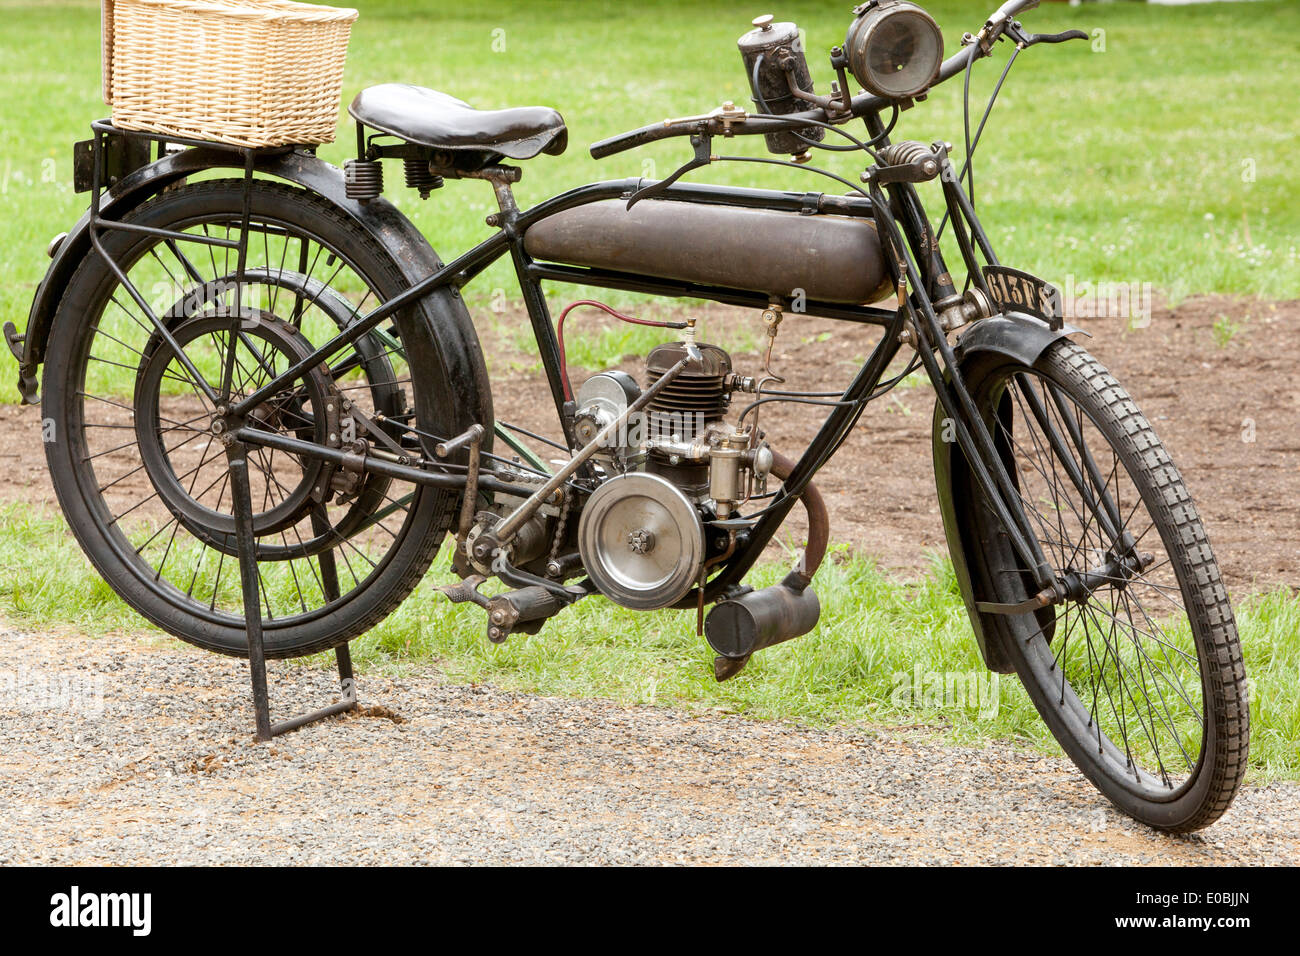 French Veteran Motorcycle brand Automoto MSW 175ccm 1925 Stock Photo - Alamy